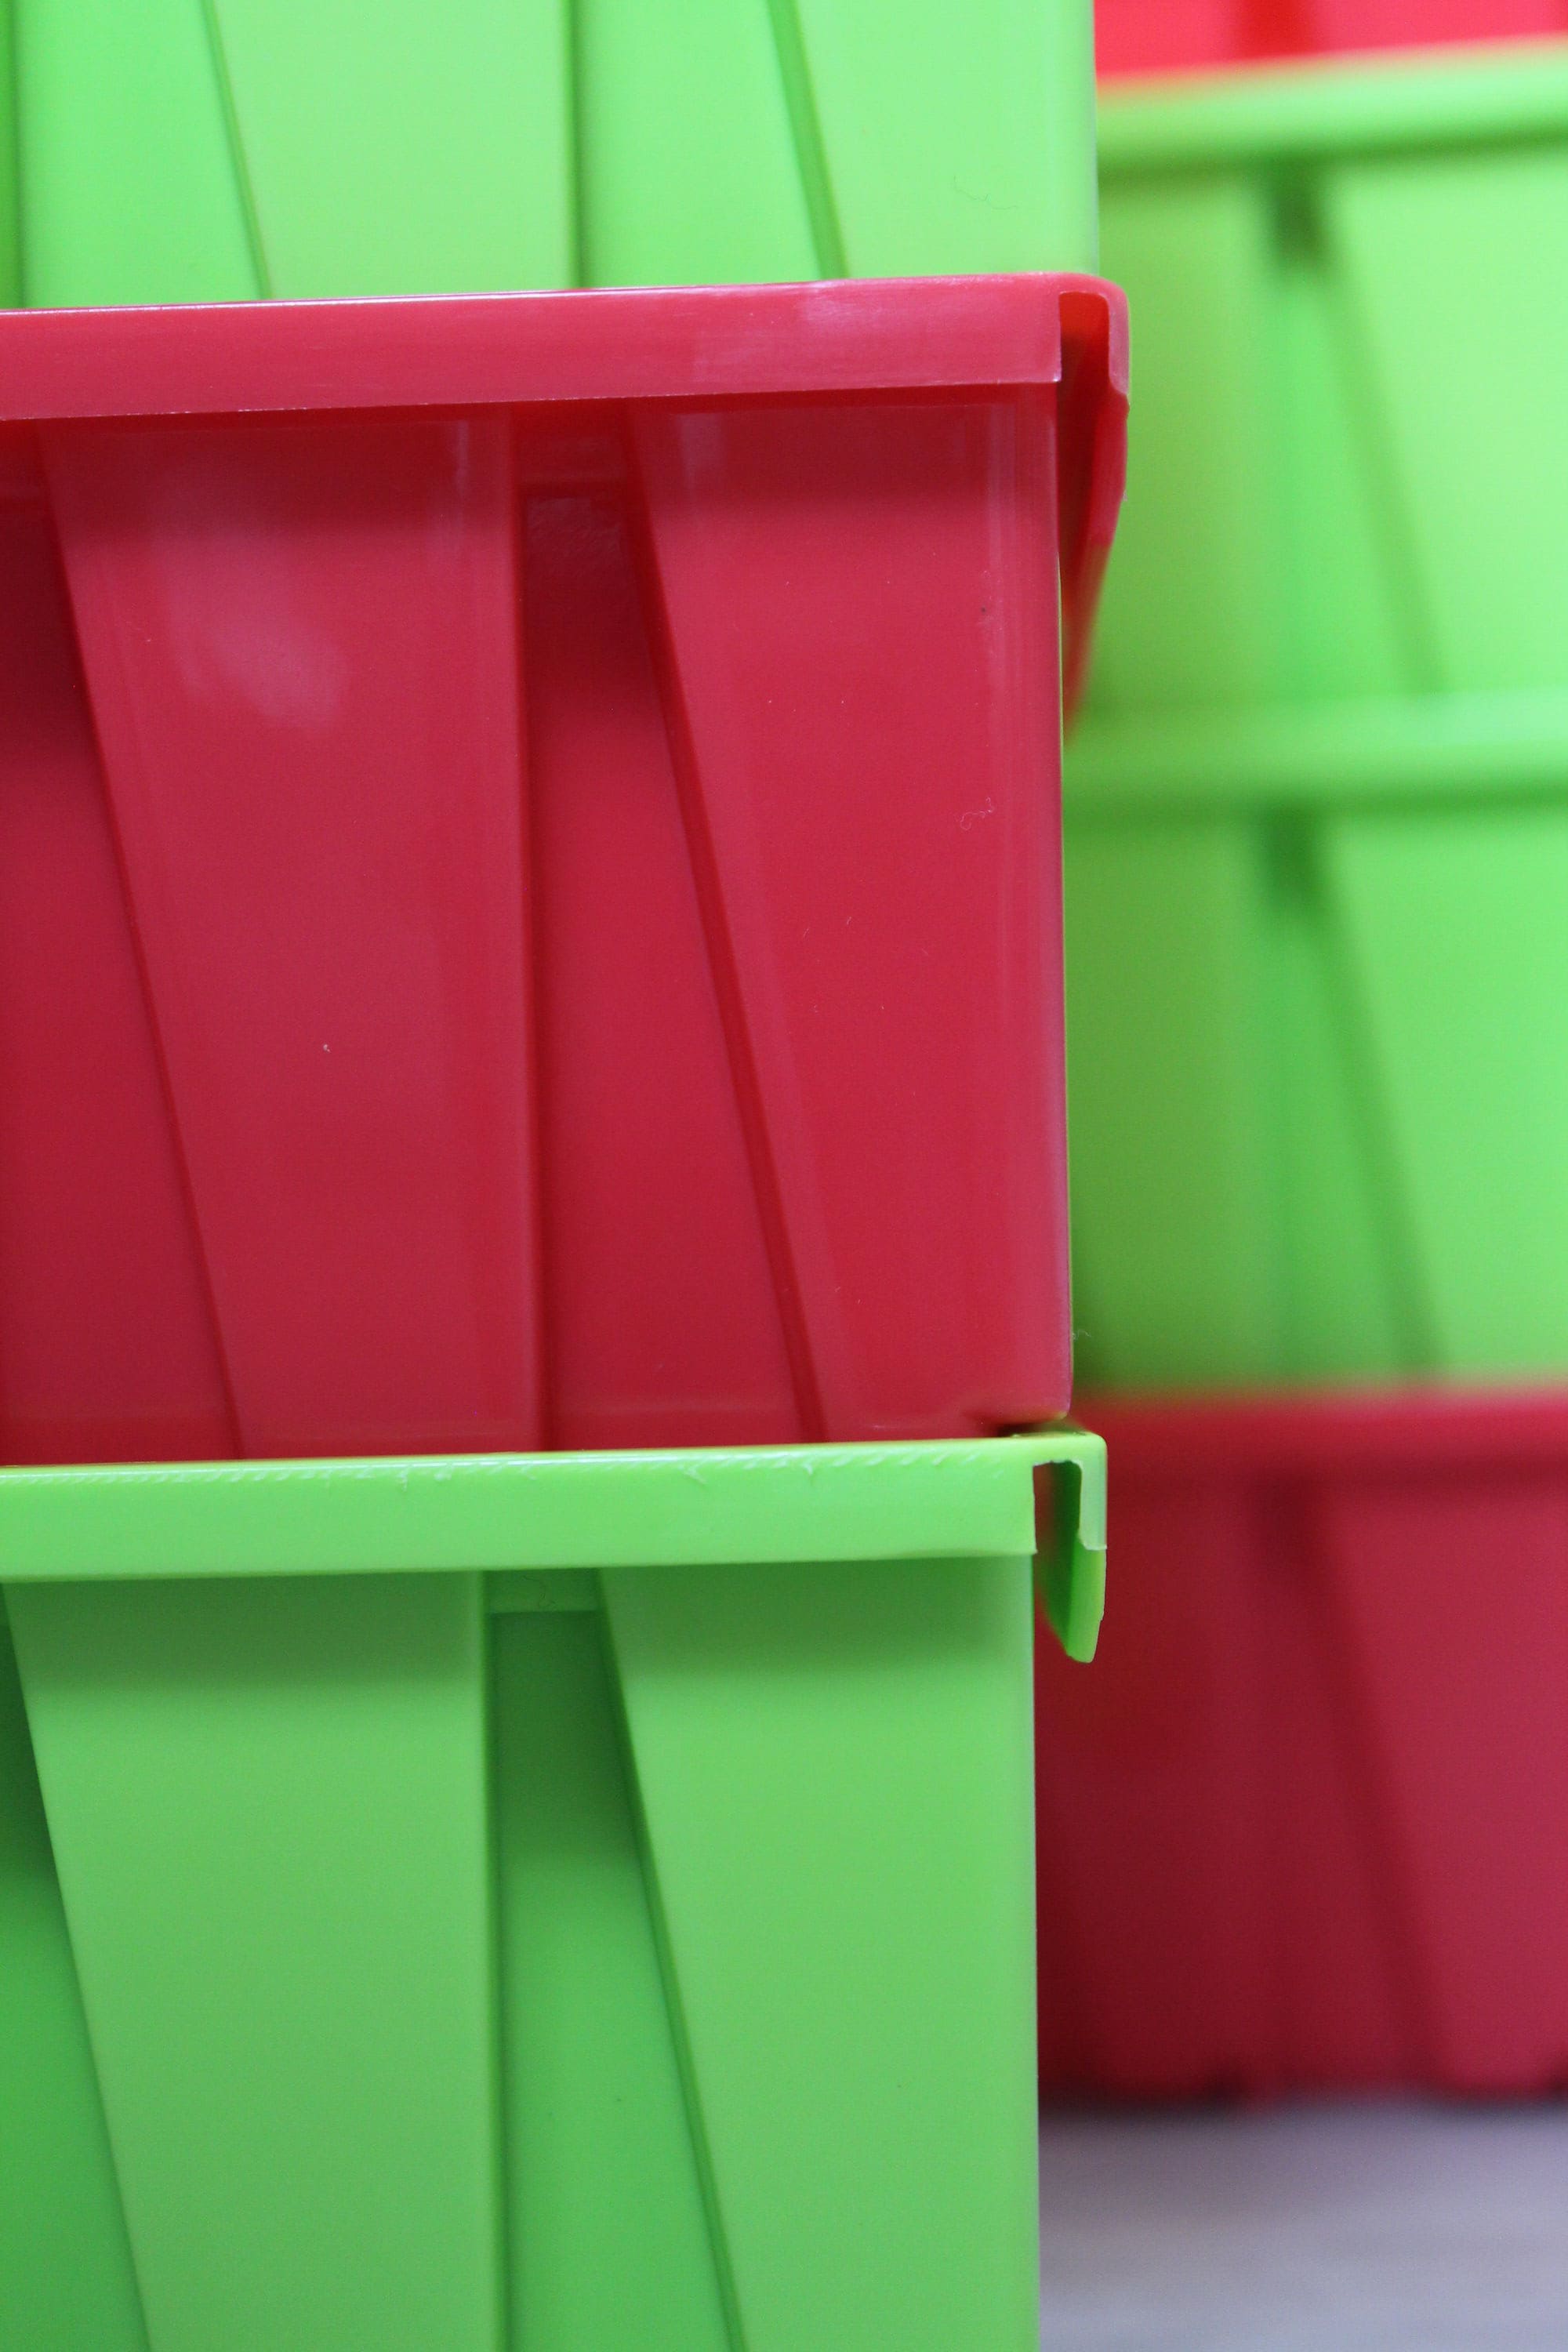 Stackable Bins  Stacking Plastic Storage Bins On Sale